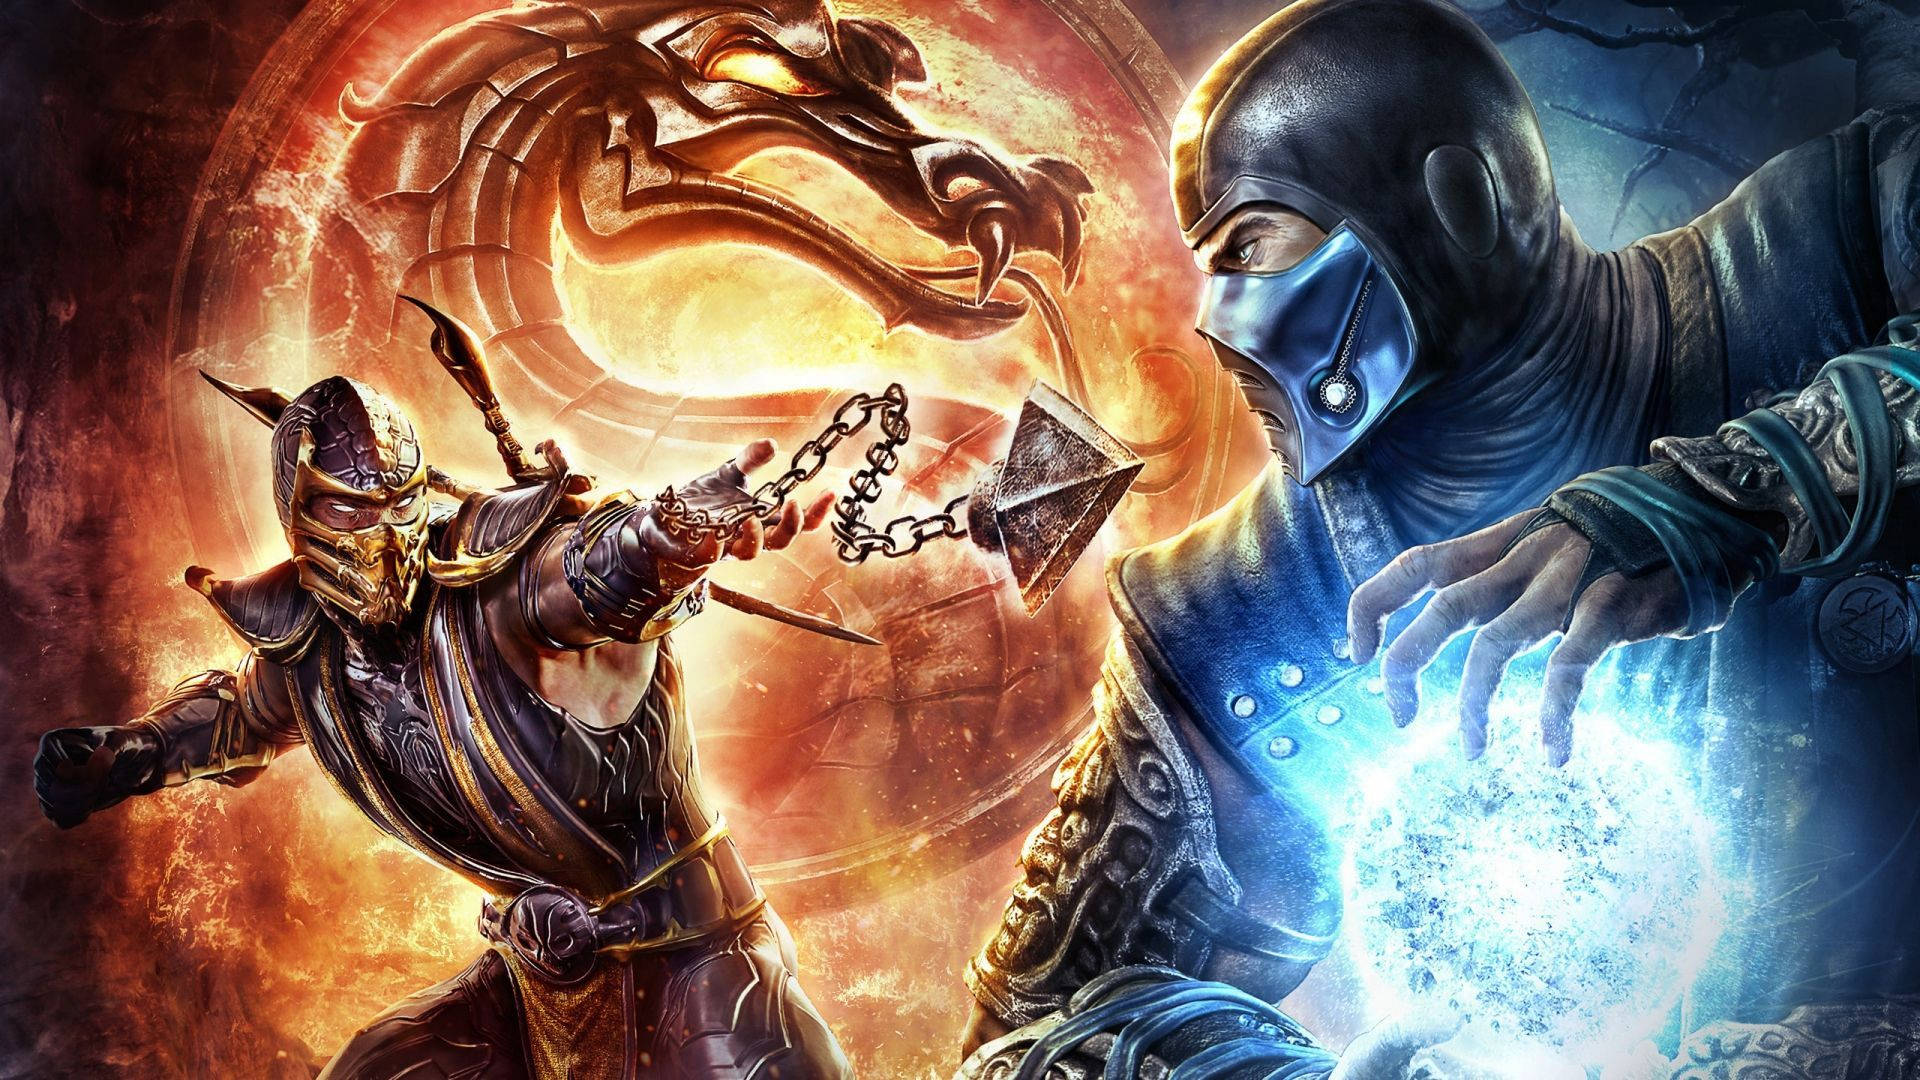 Mortal Kombat Scorpion Vs Sub Zero Battle Background